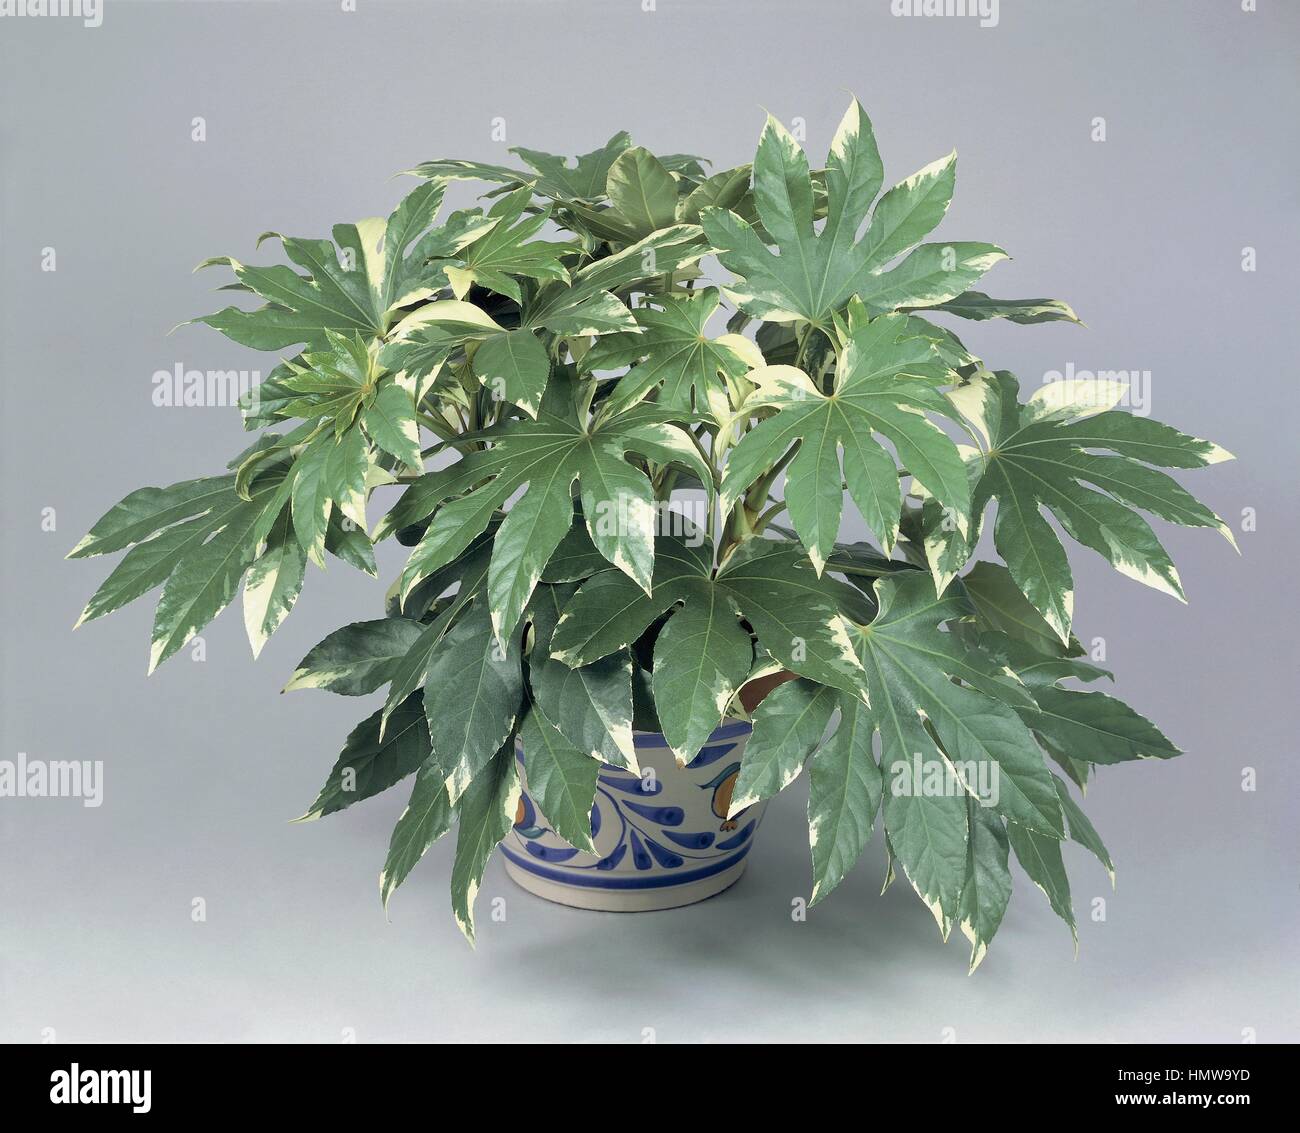 Houseplants - Araliaceae. Paperplant (Fatsia japonica variegata) Stock Photo